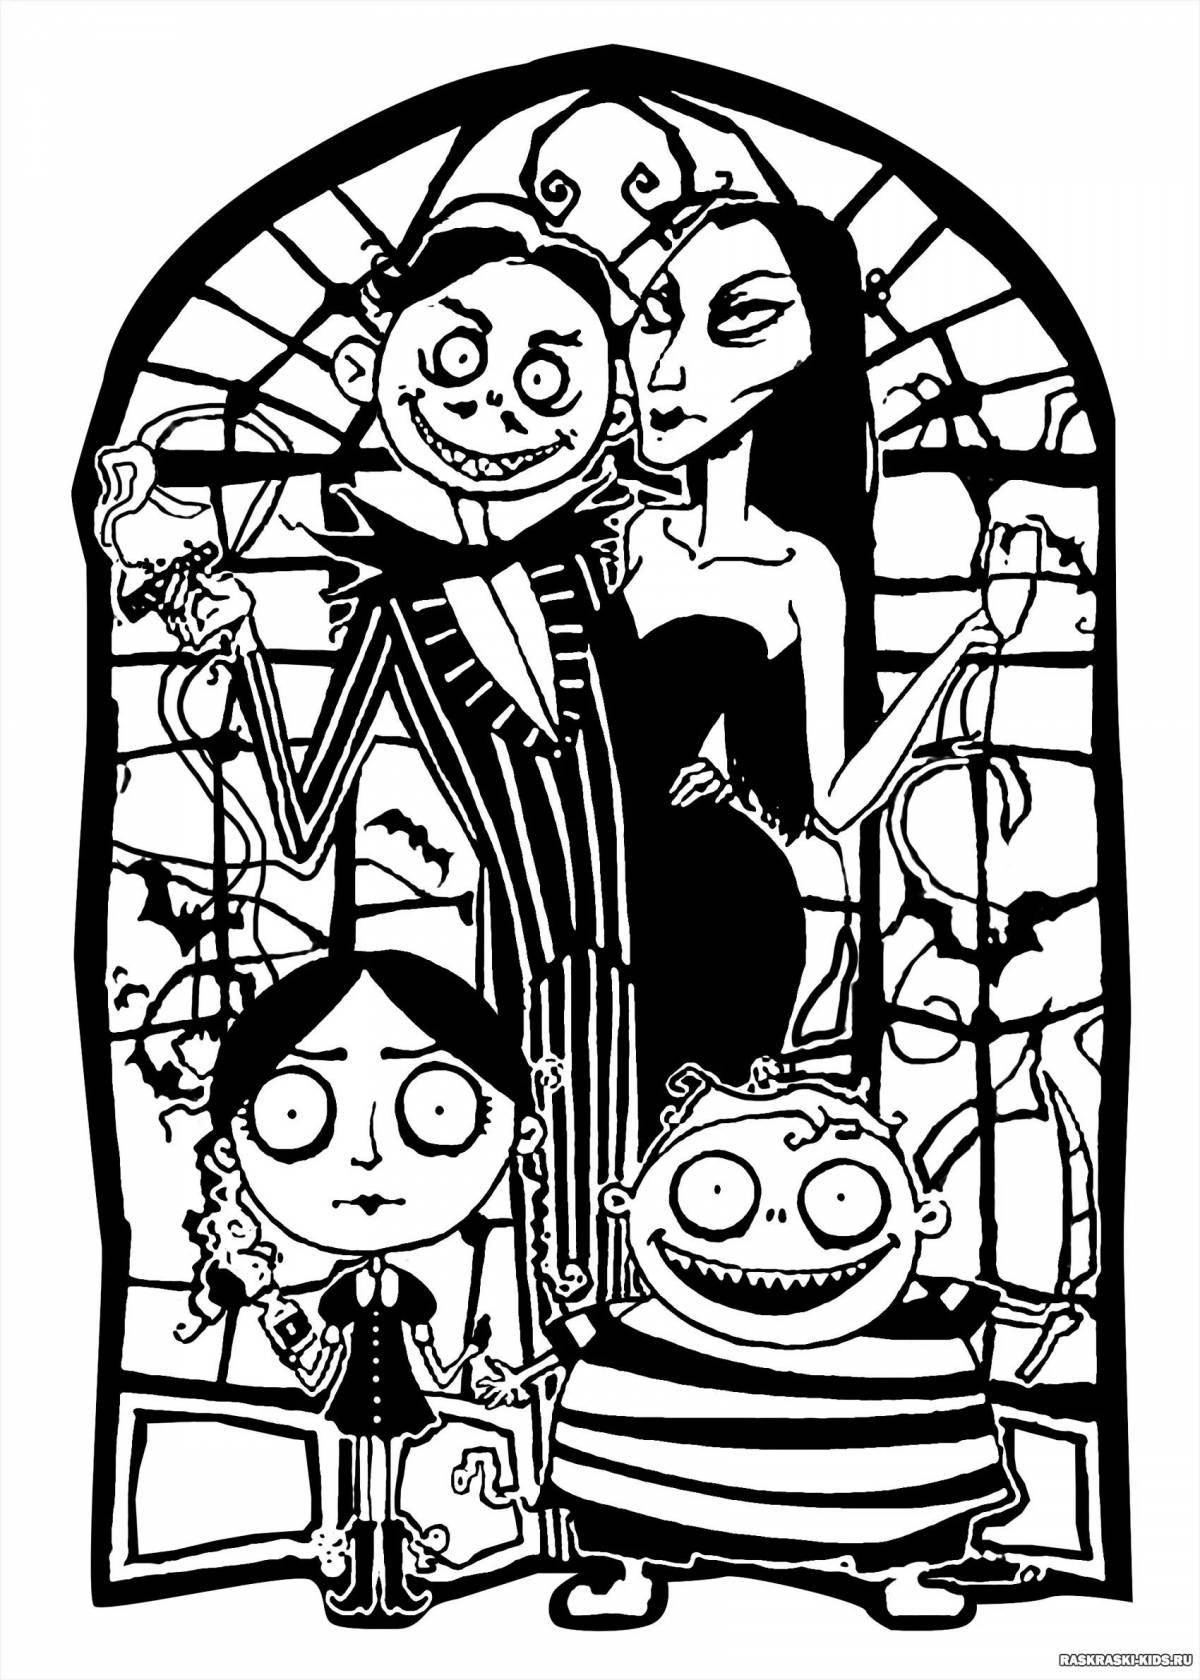 Addams family item #5